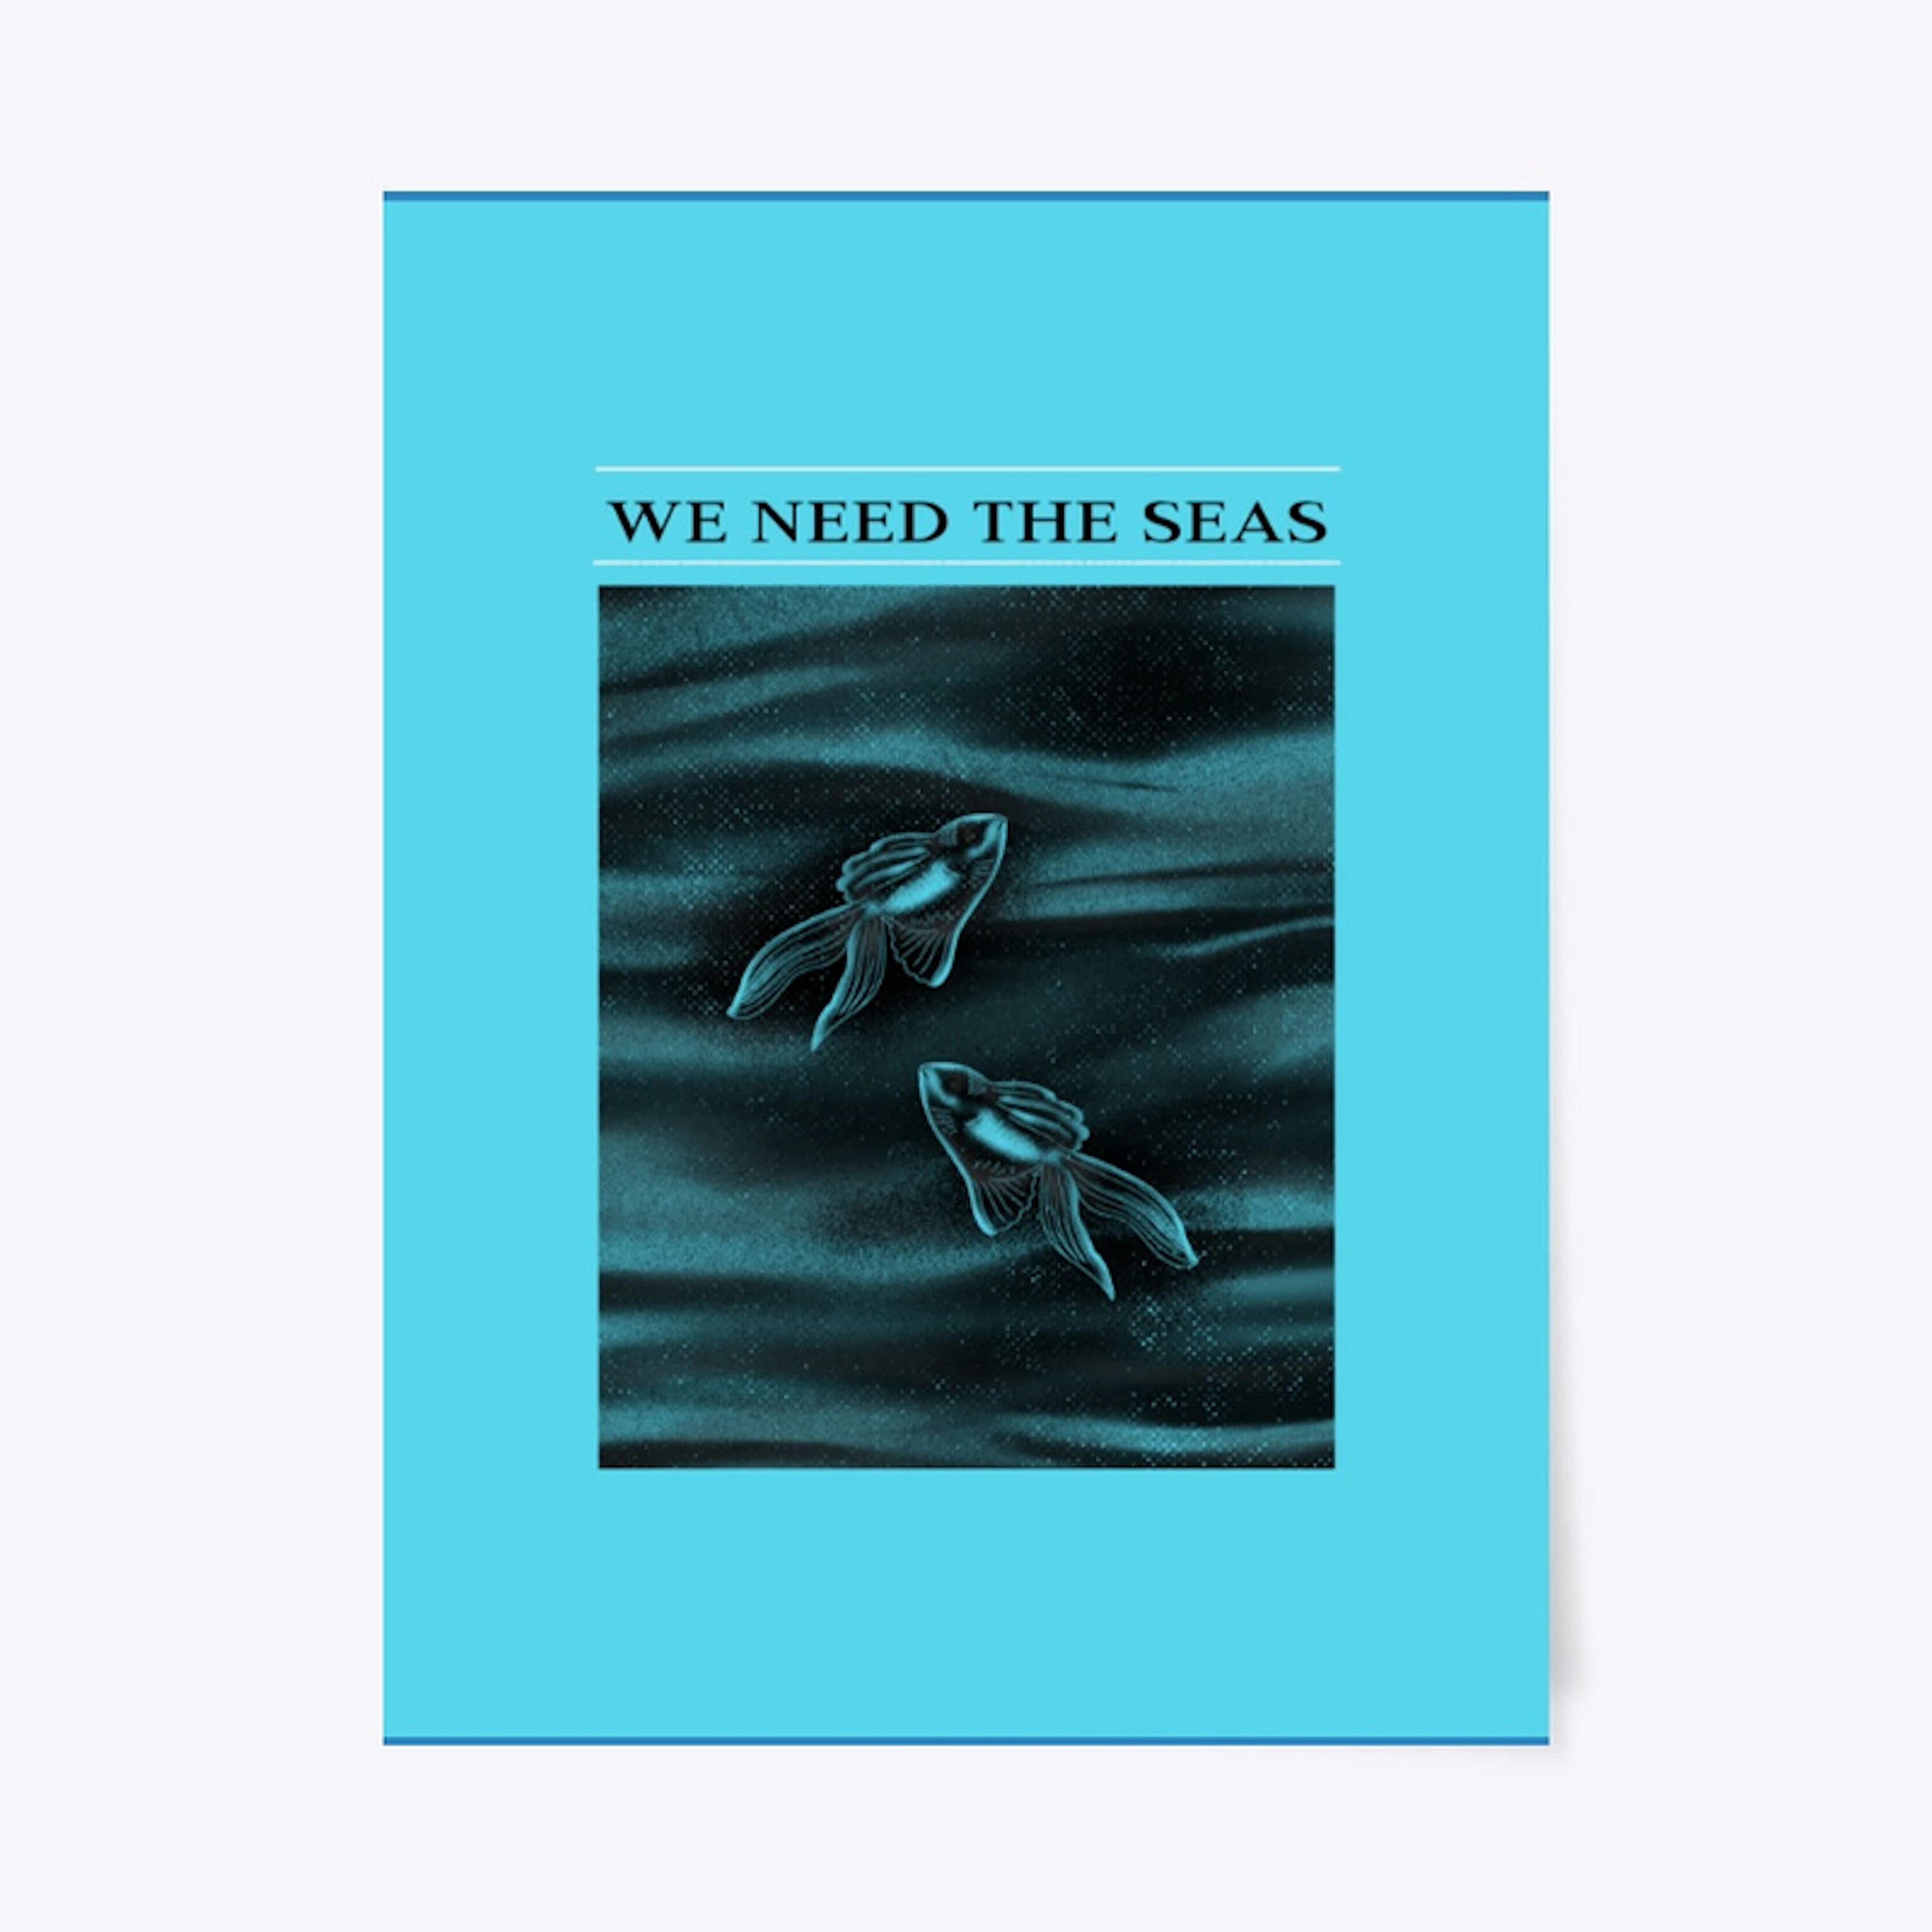 WE NEED THE SEAS